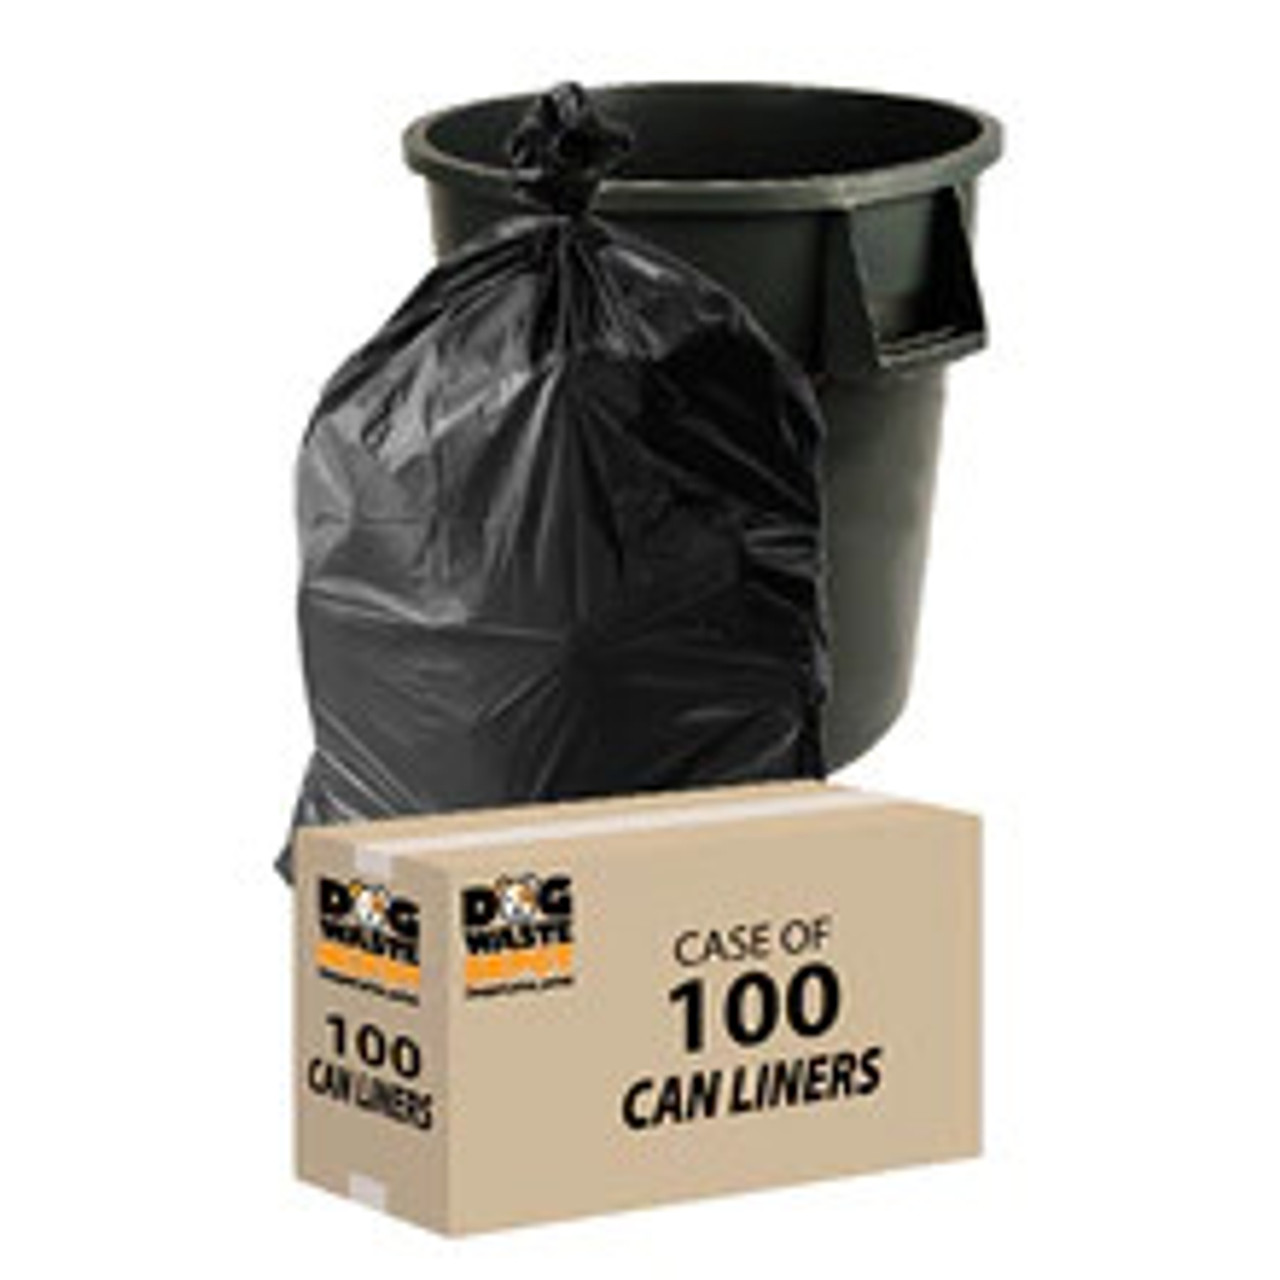 55 Gallon Trash Can Liner - Compostable - 100/cs